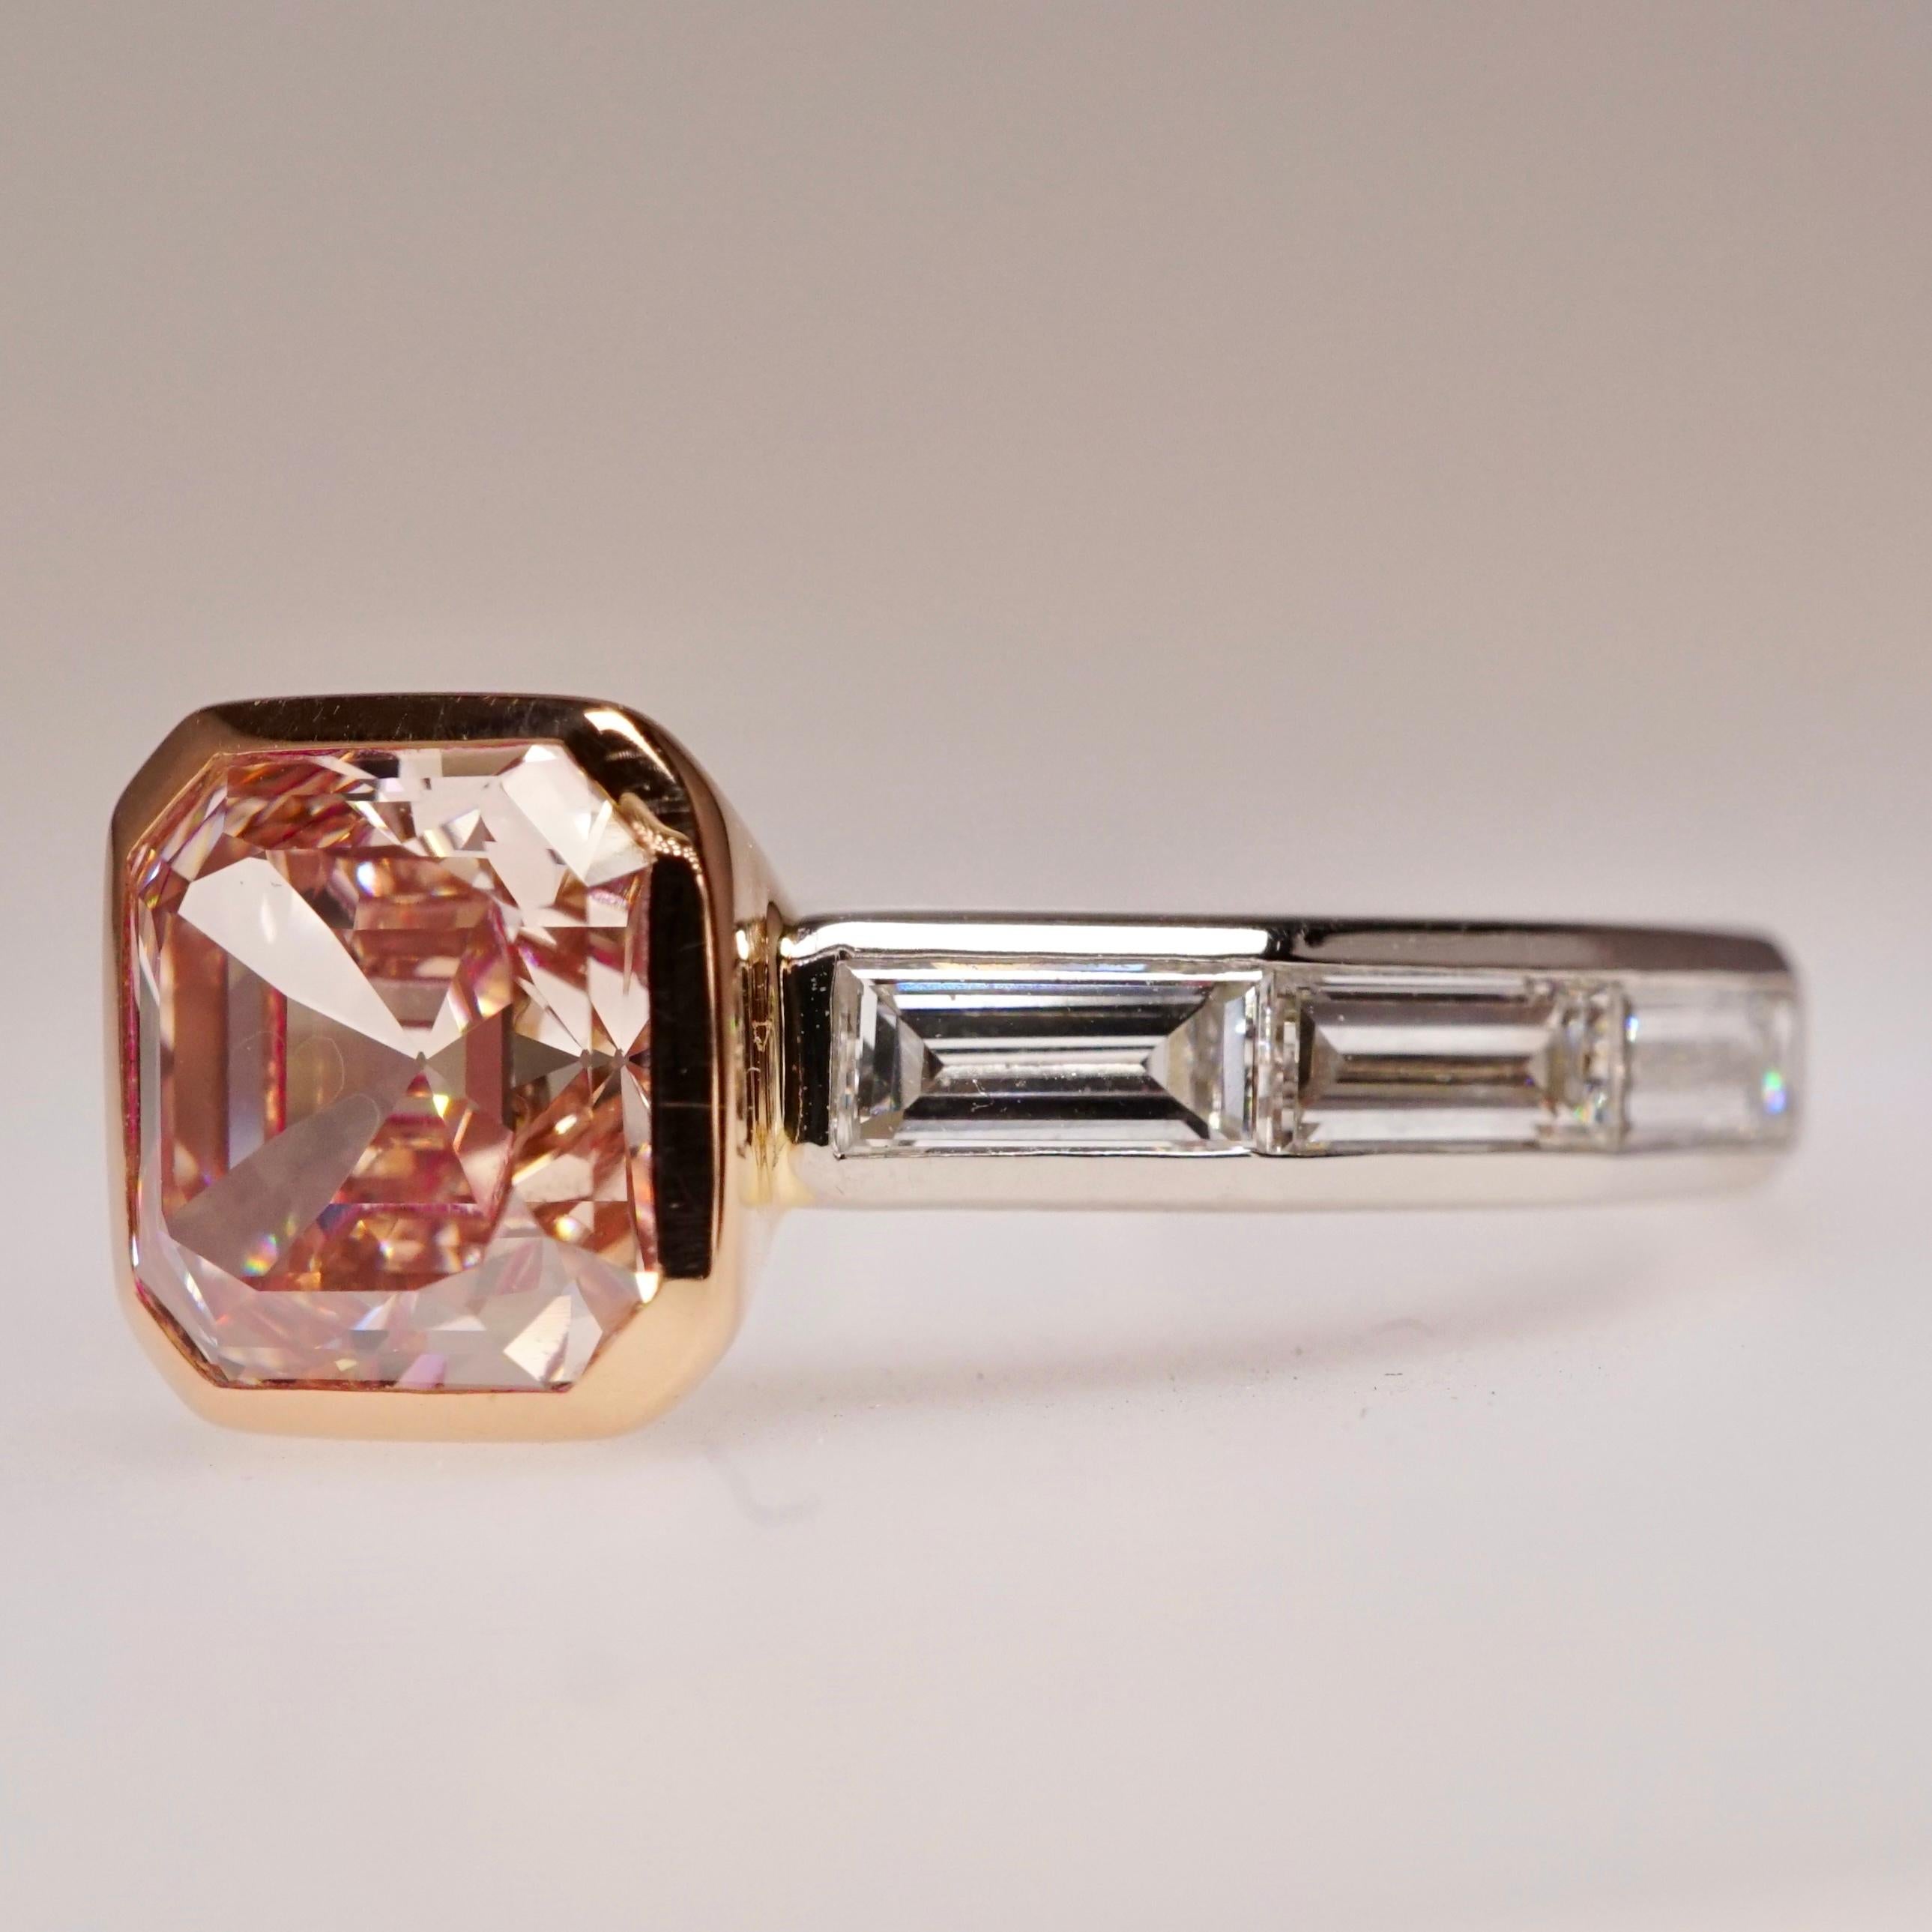 For Sale:  GIA Certified 1.57 Carat Fancy Pink-Brown Asscher Cut Diamond Engagement Ring 5